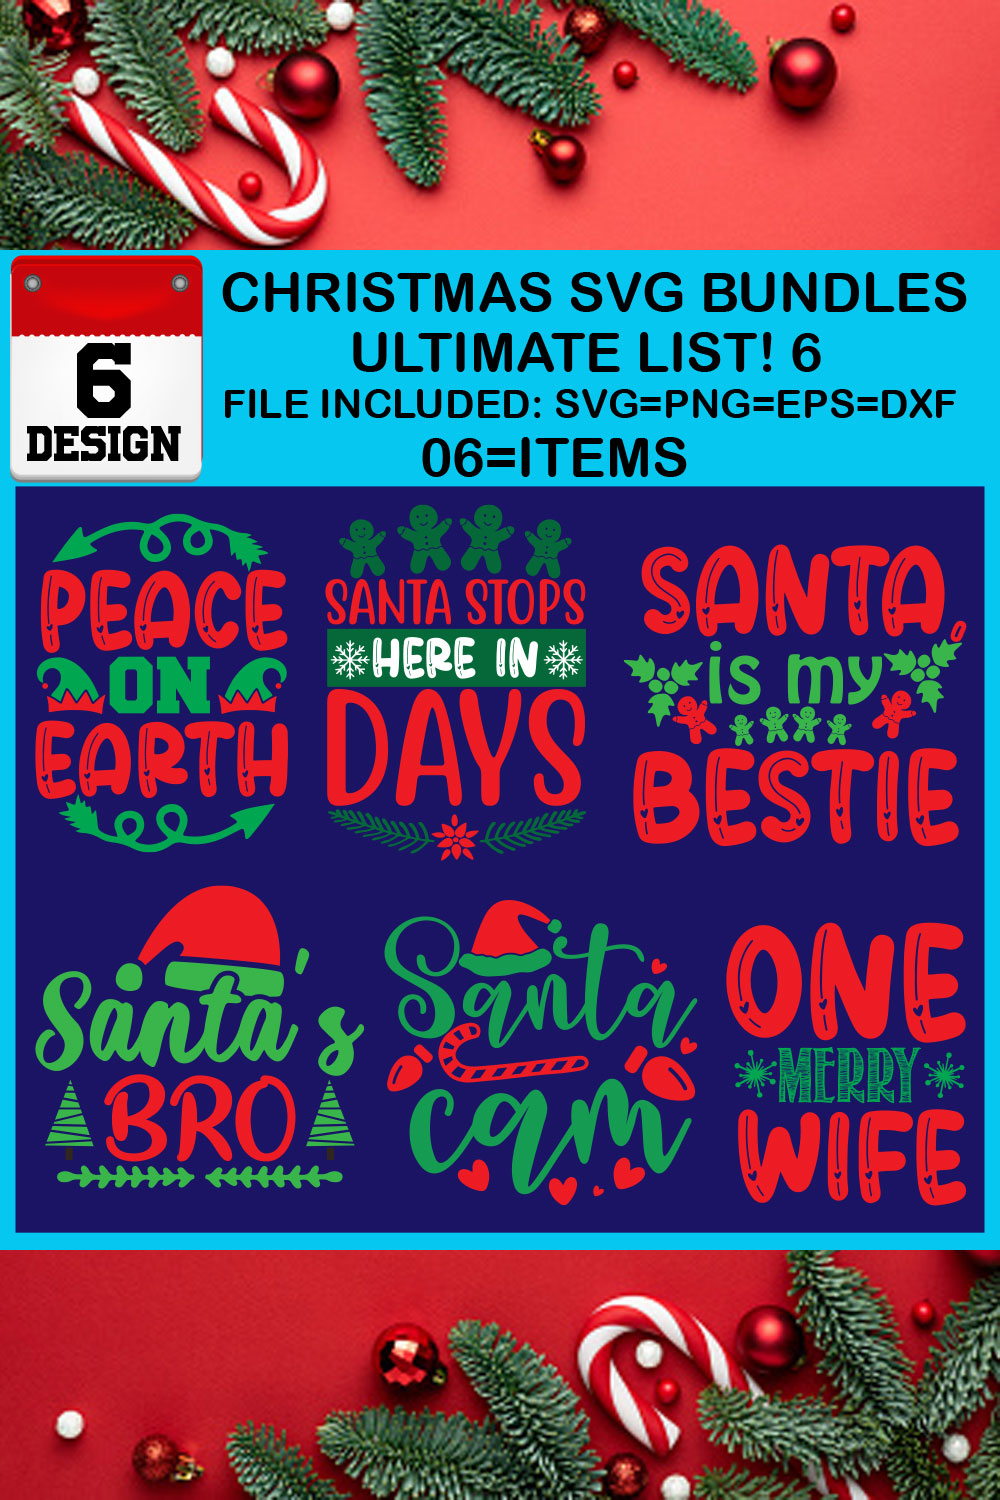 Ultimate List! 6 Christmas SVG Free Bundles pinterest preview image.